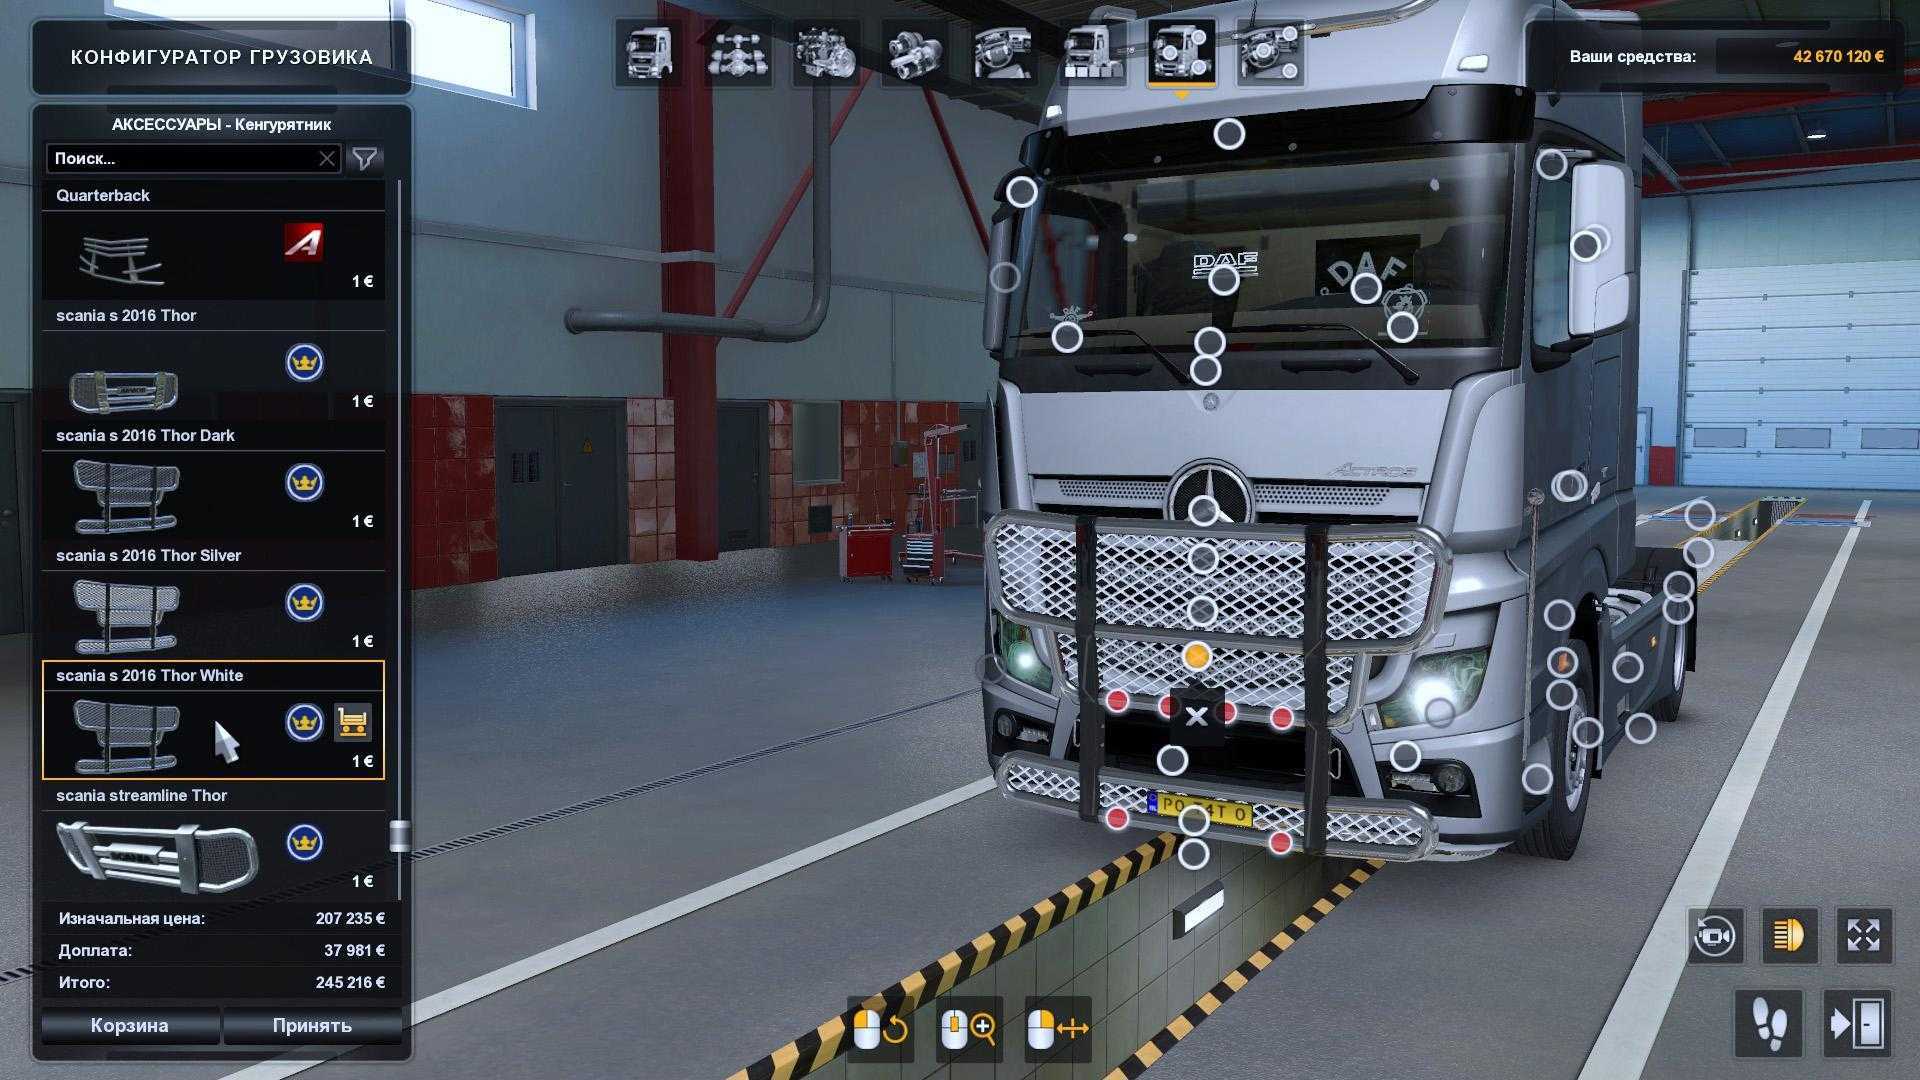 скачать мод на много денег на игру euro truck simulator 2 фото 14